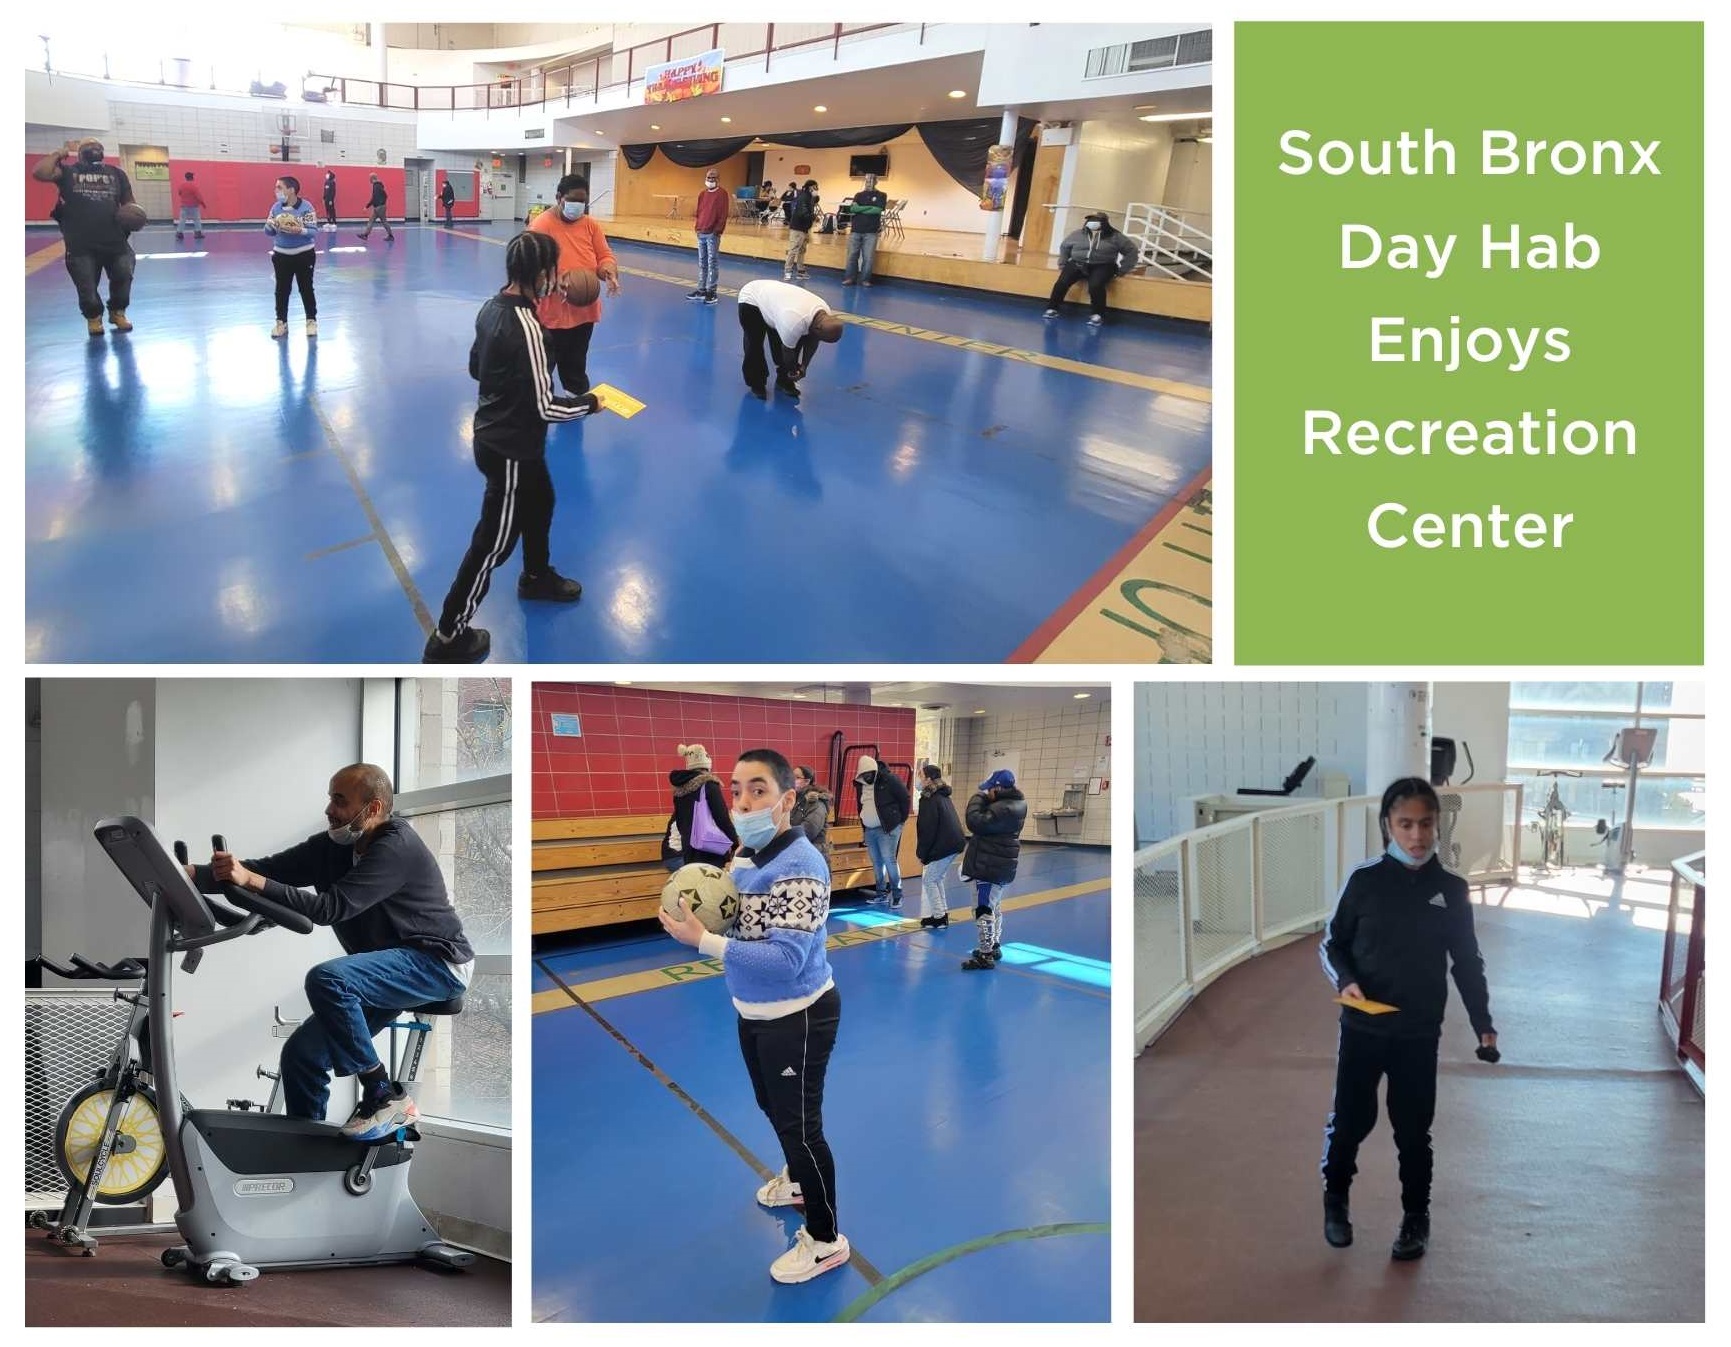 South Bronx Day Hab Enjoys Recreation Center